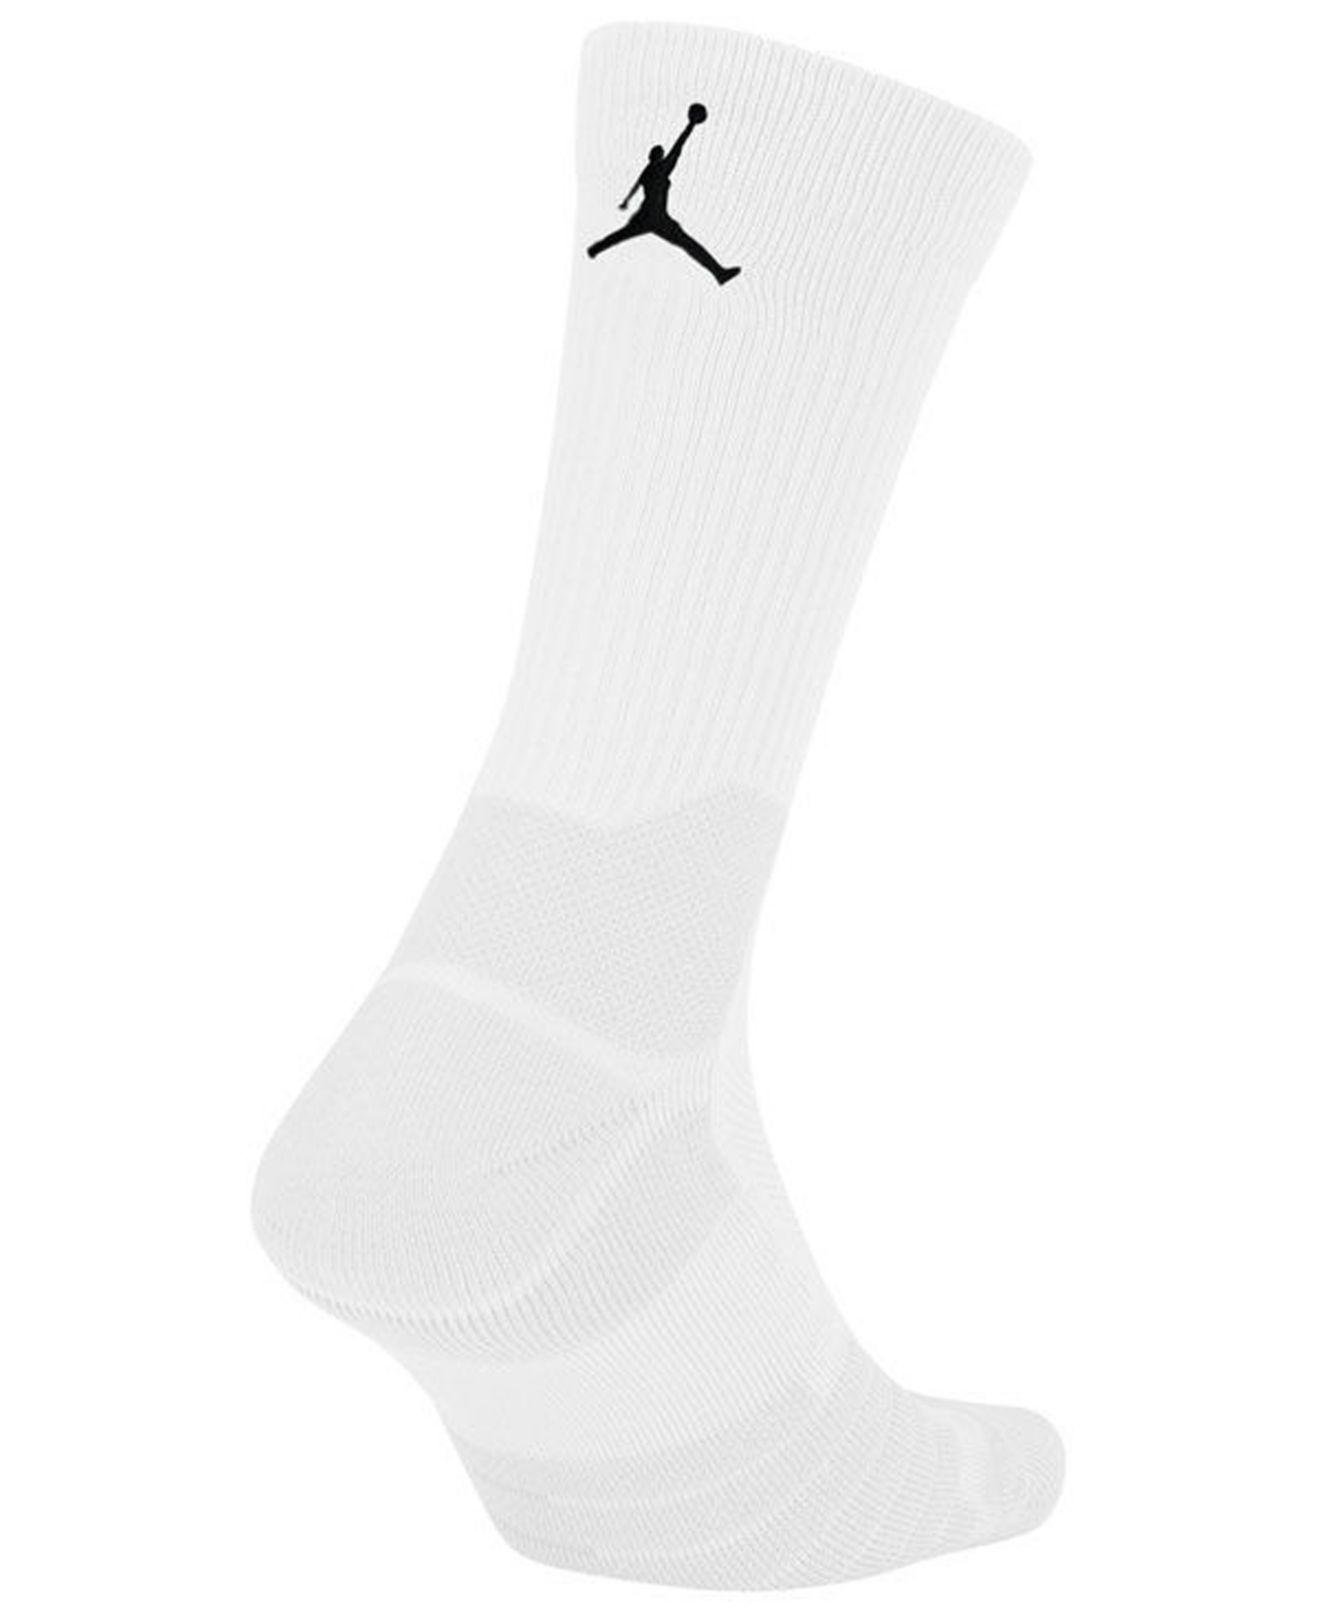 Nike Synthetic Nba All Star Elite Quick Jordan Crew Socks in White ...